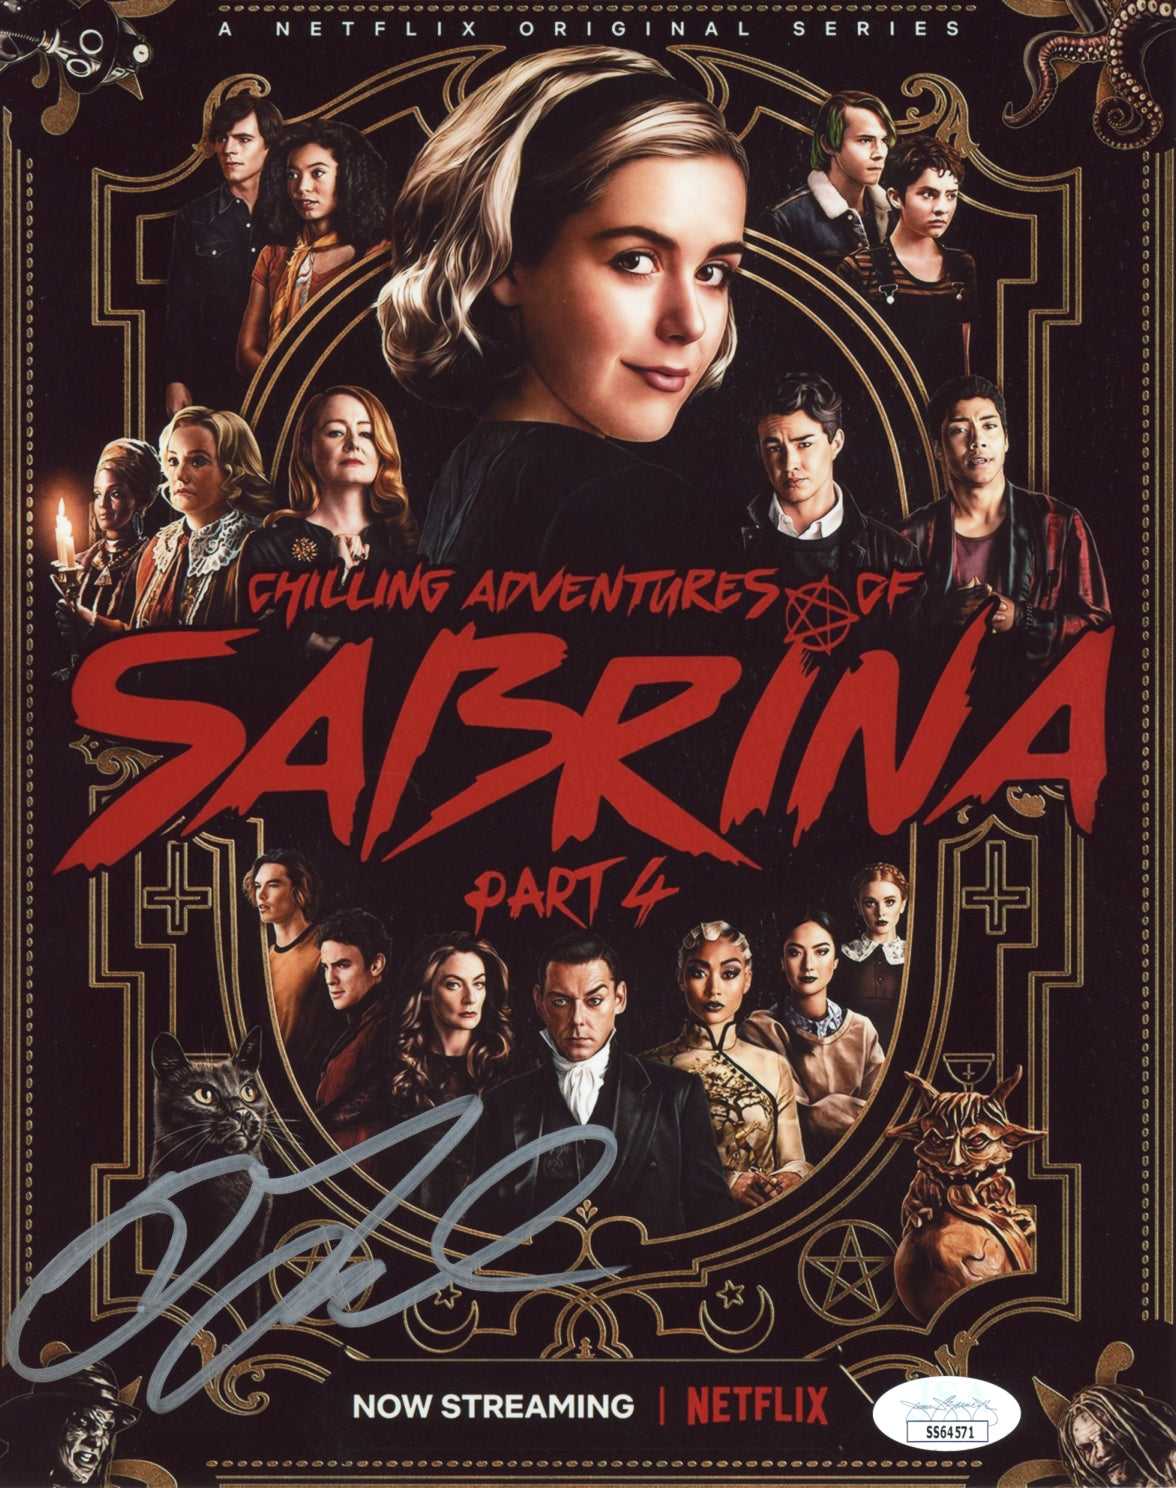 Gavin Leatherwood Chilling Adventures of Sabrina 8x10 Photo Signed Autograph JSA Certified COA Auto